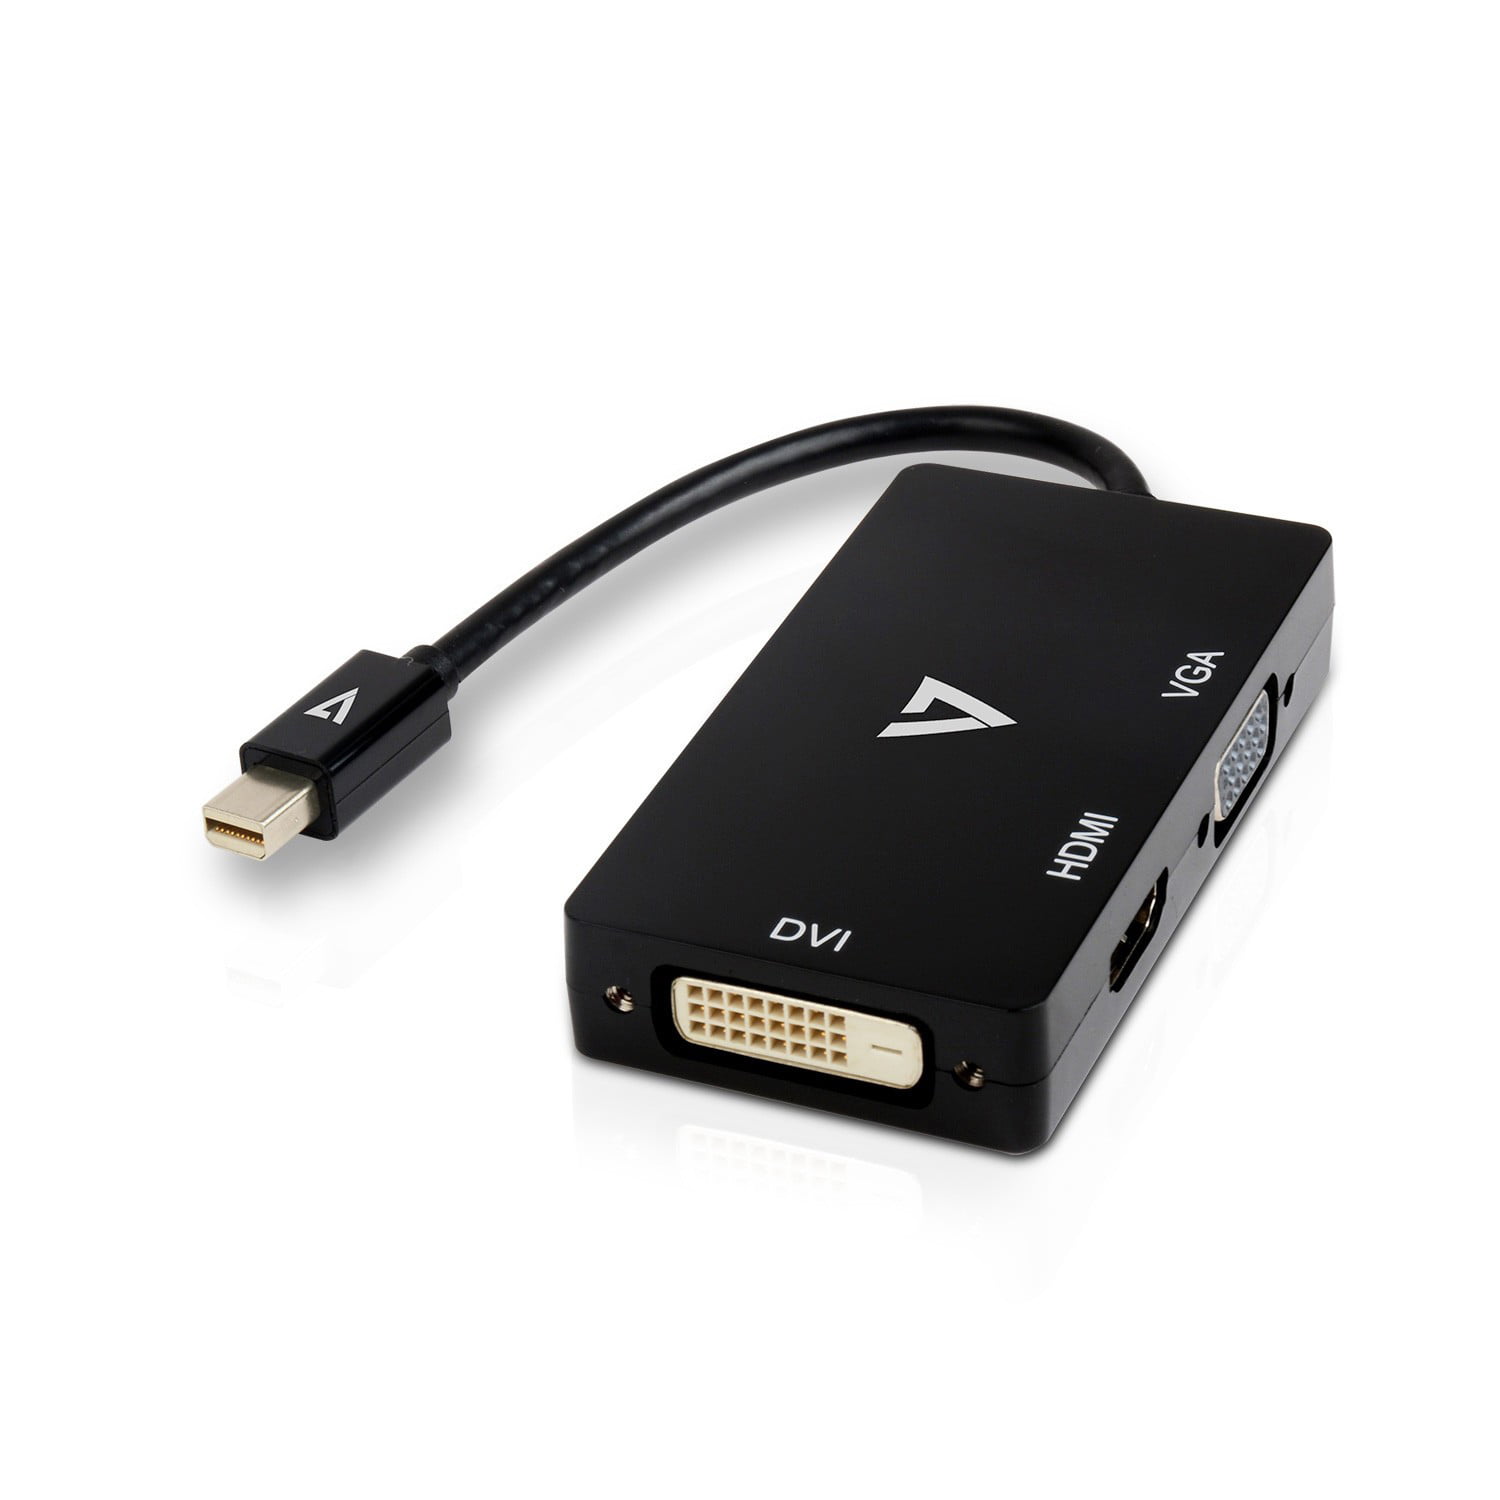 Black DisplayPort Male to HDMI Female Video Adapter